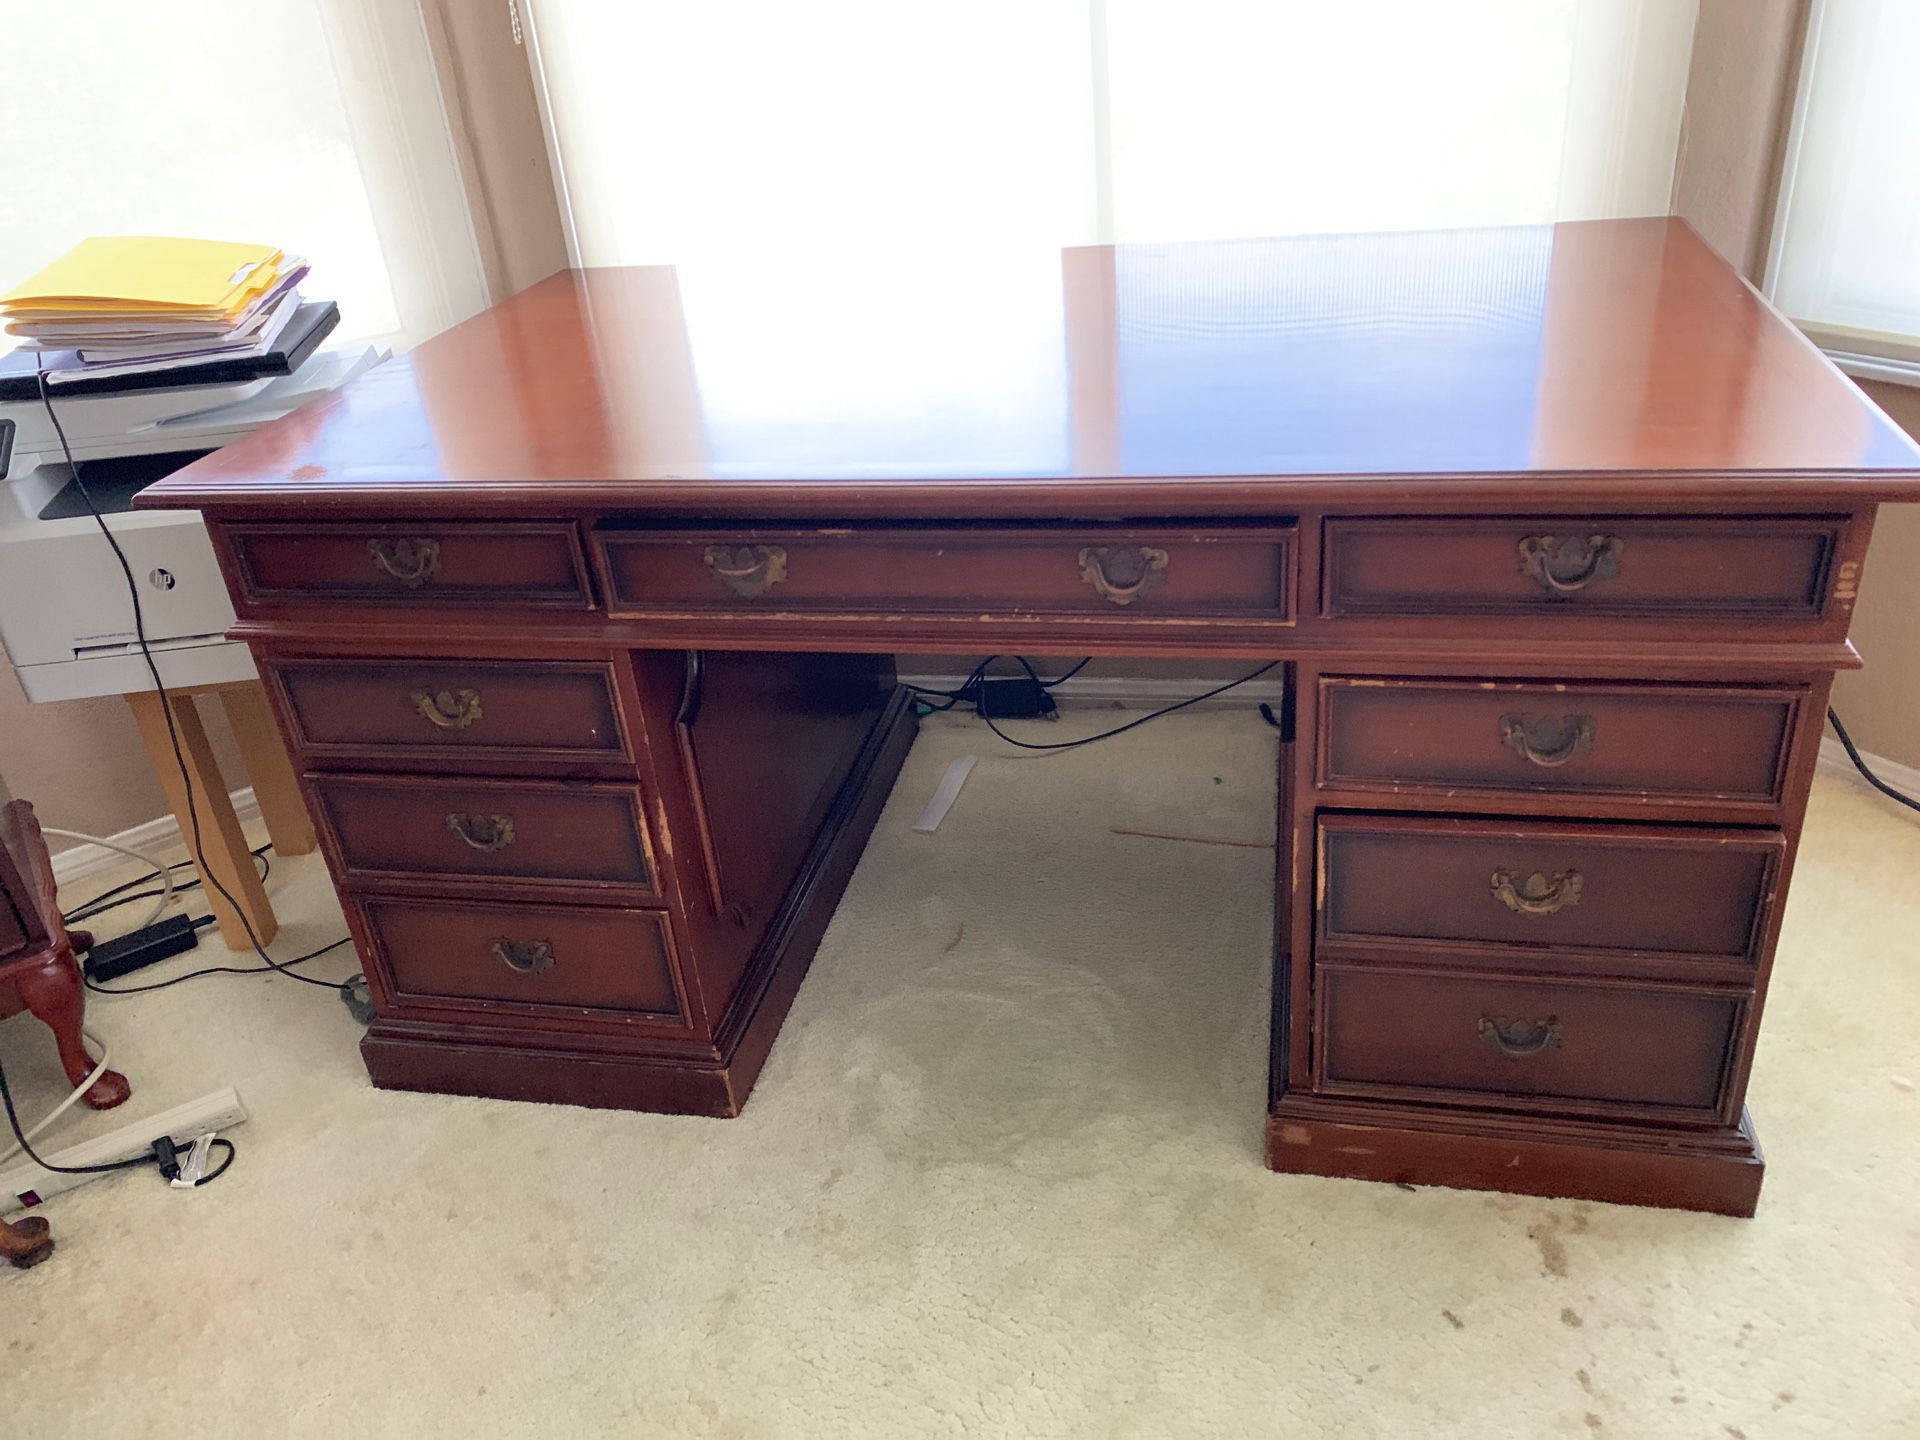 Antique Executive Desk - Classic